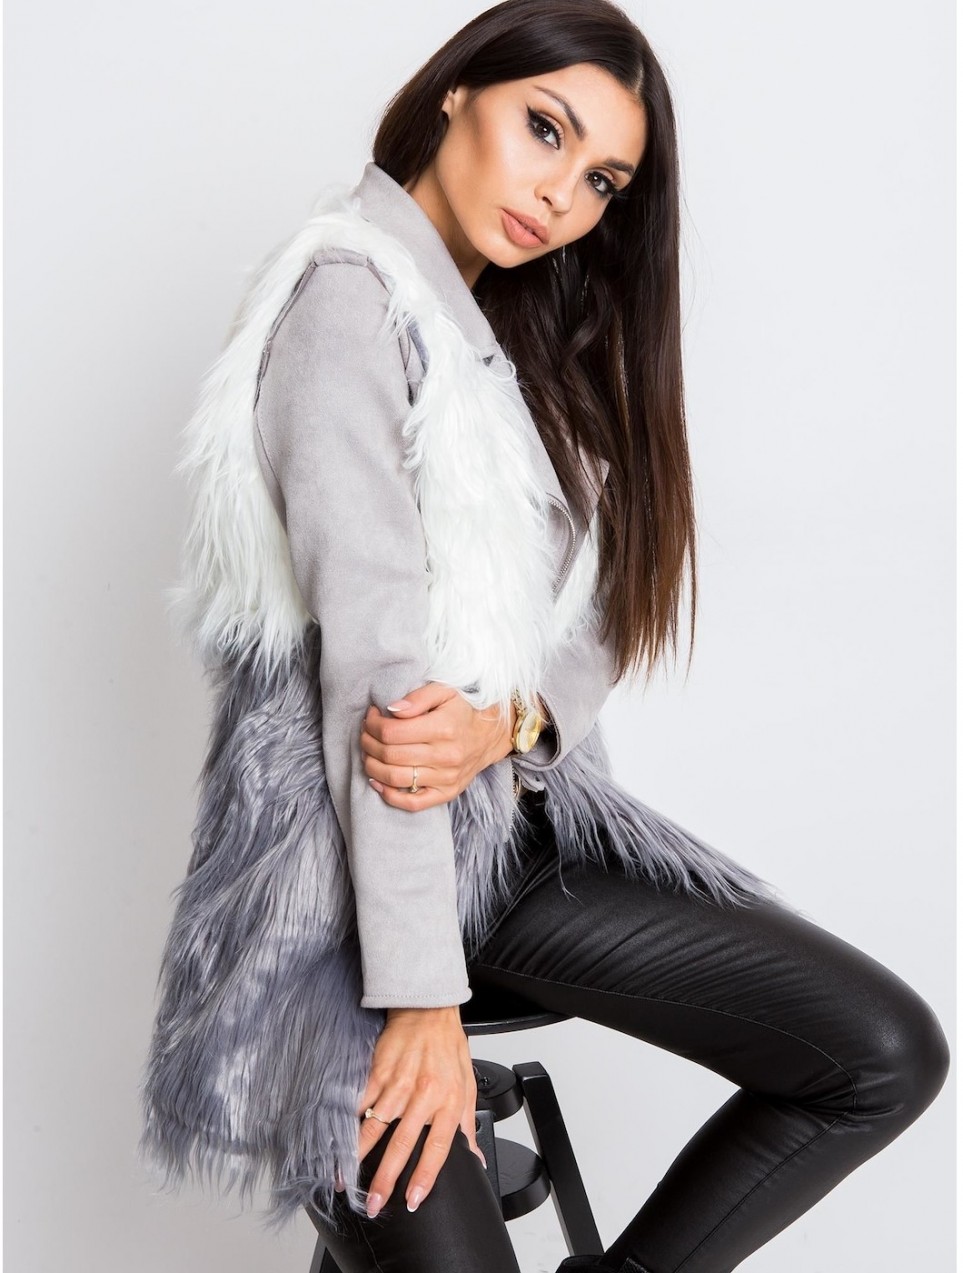 White and gray fur vest